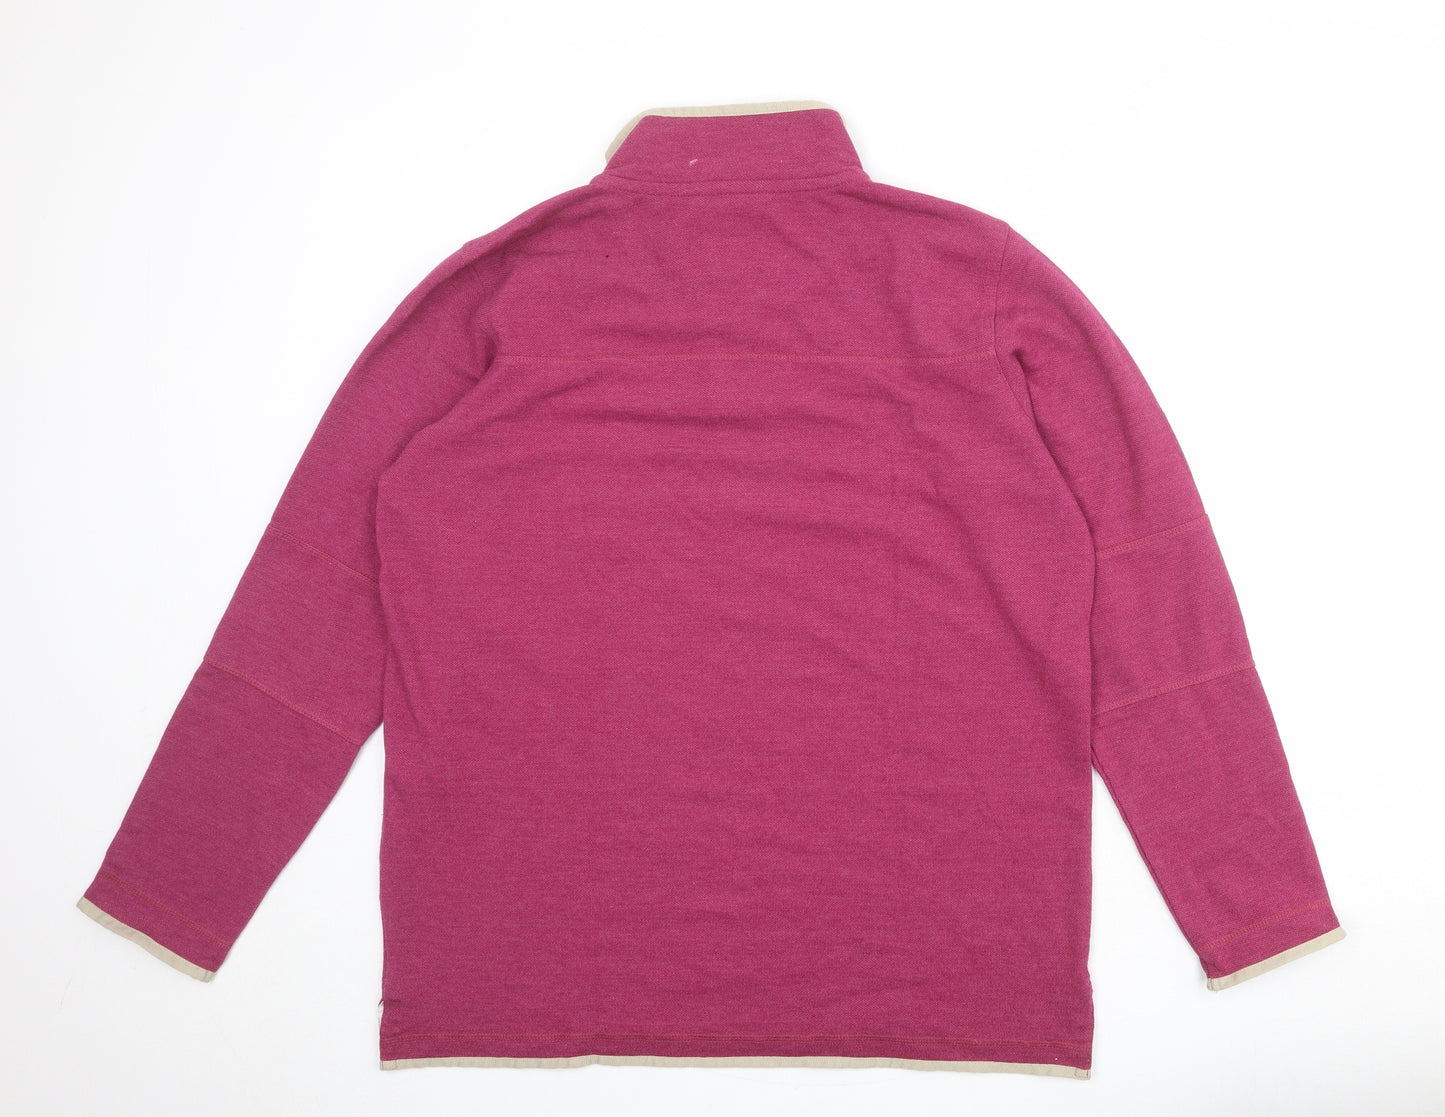 Cotton Traders Mens Purple Cotton Henley Sweatshirt Size L